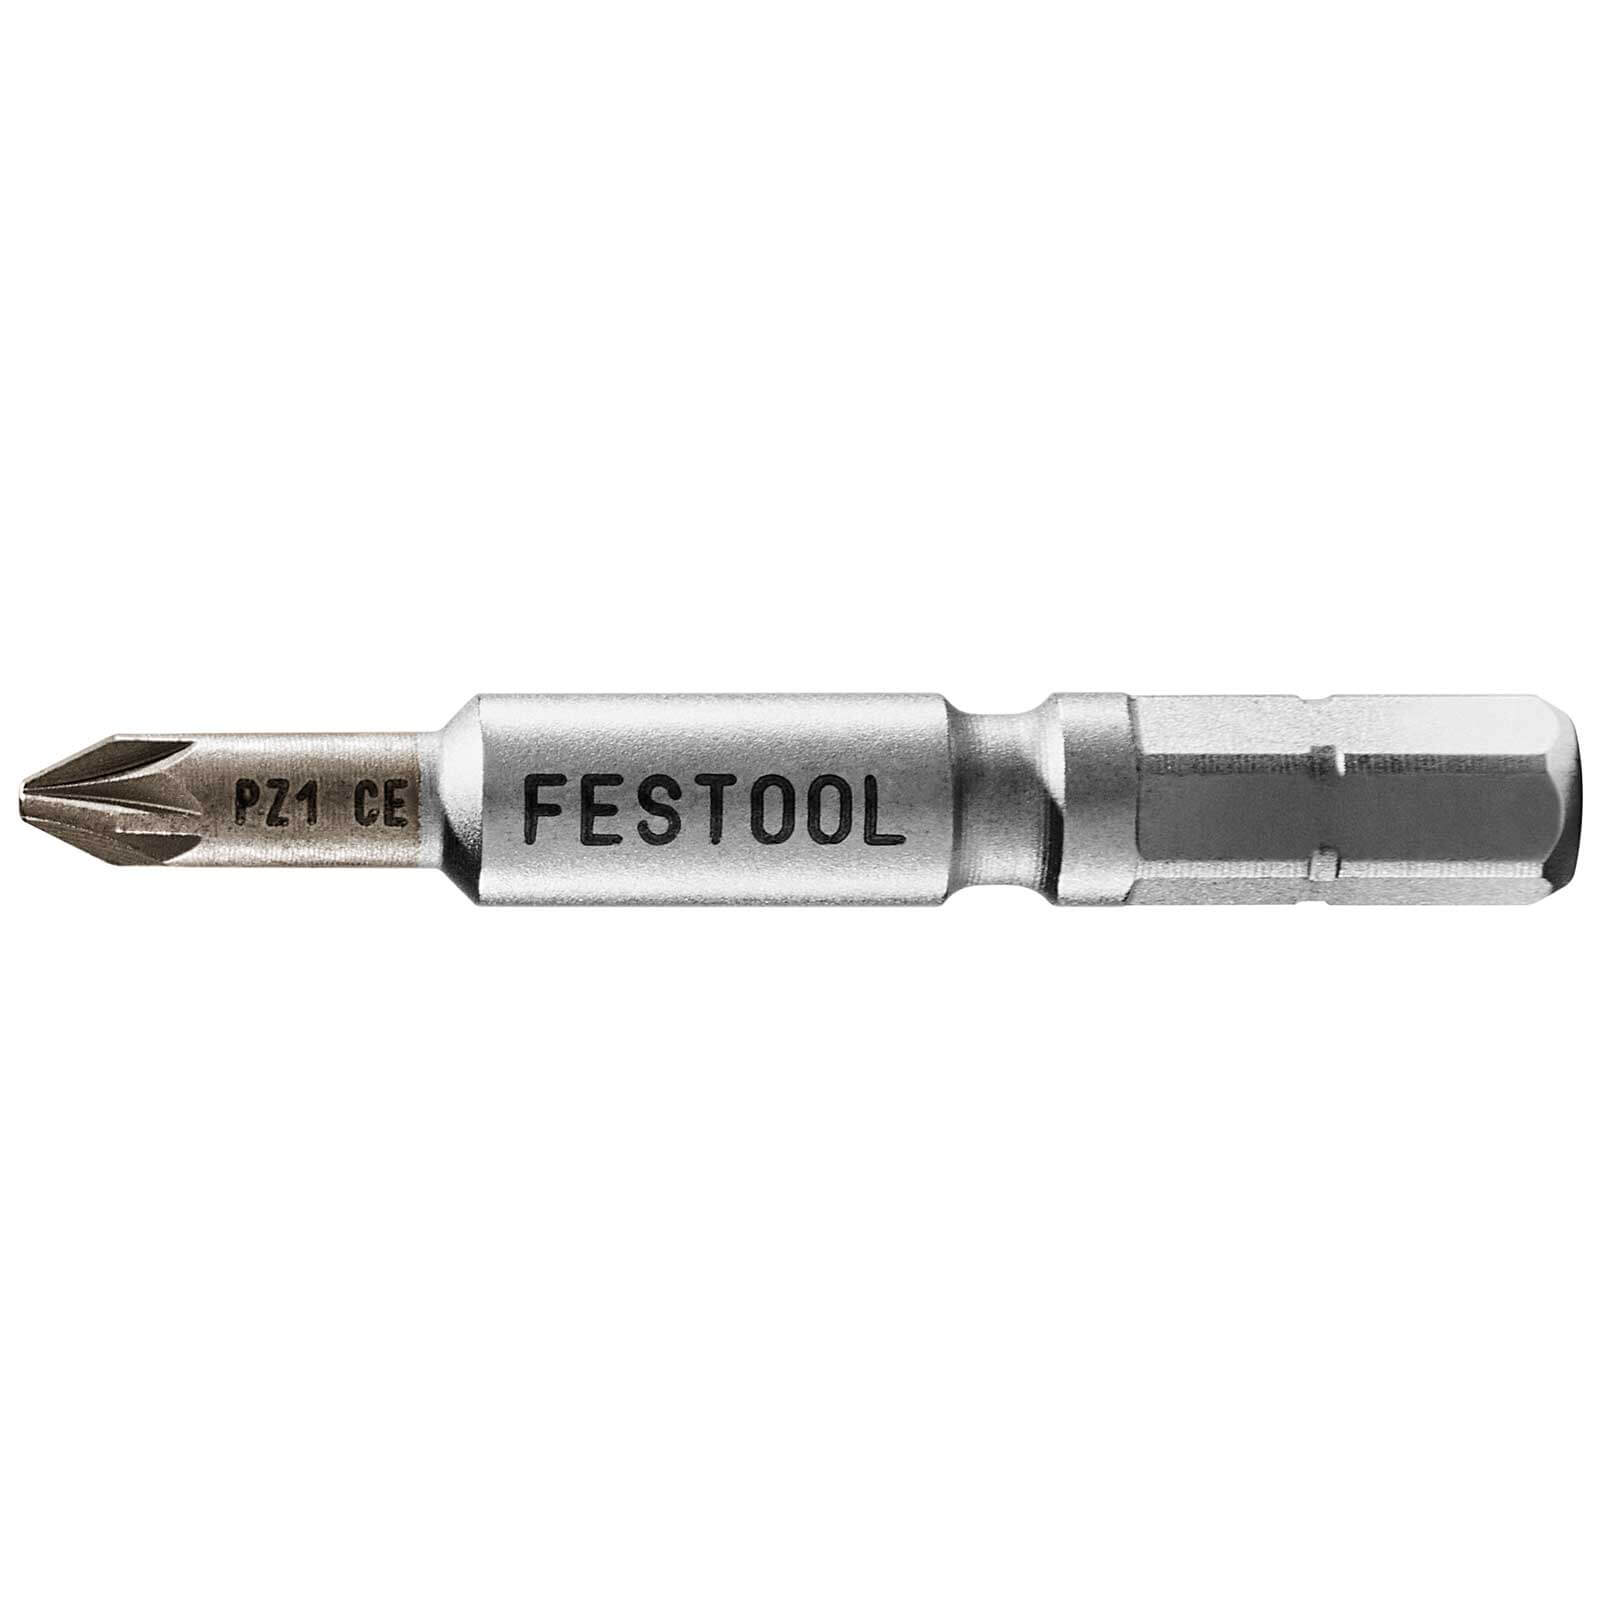 Image of Festool Centrotec Pozi Screwdriver Bits PZ1 50mm Pack of 2